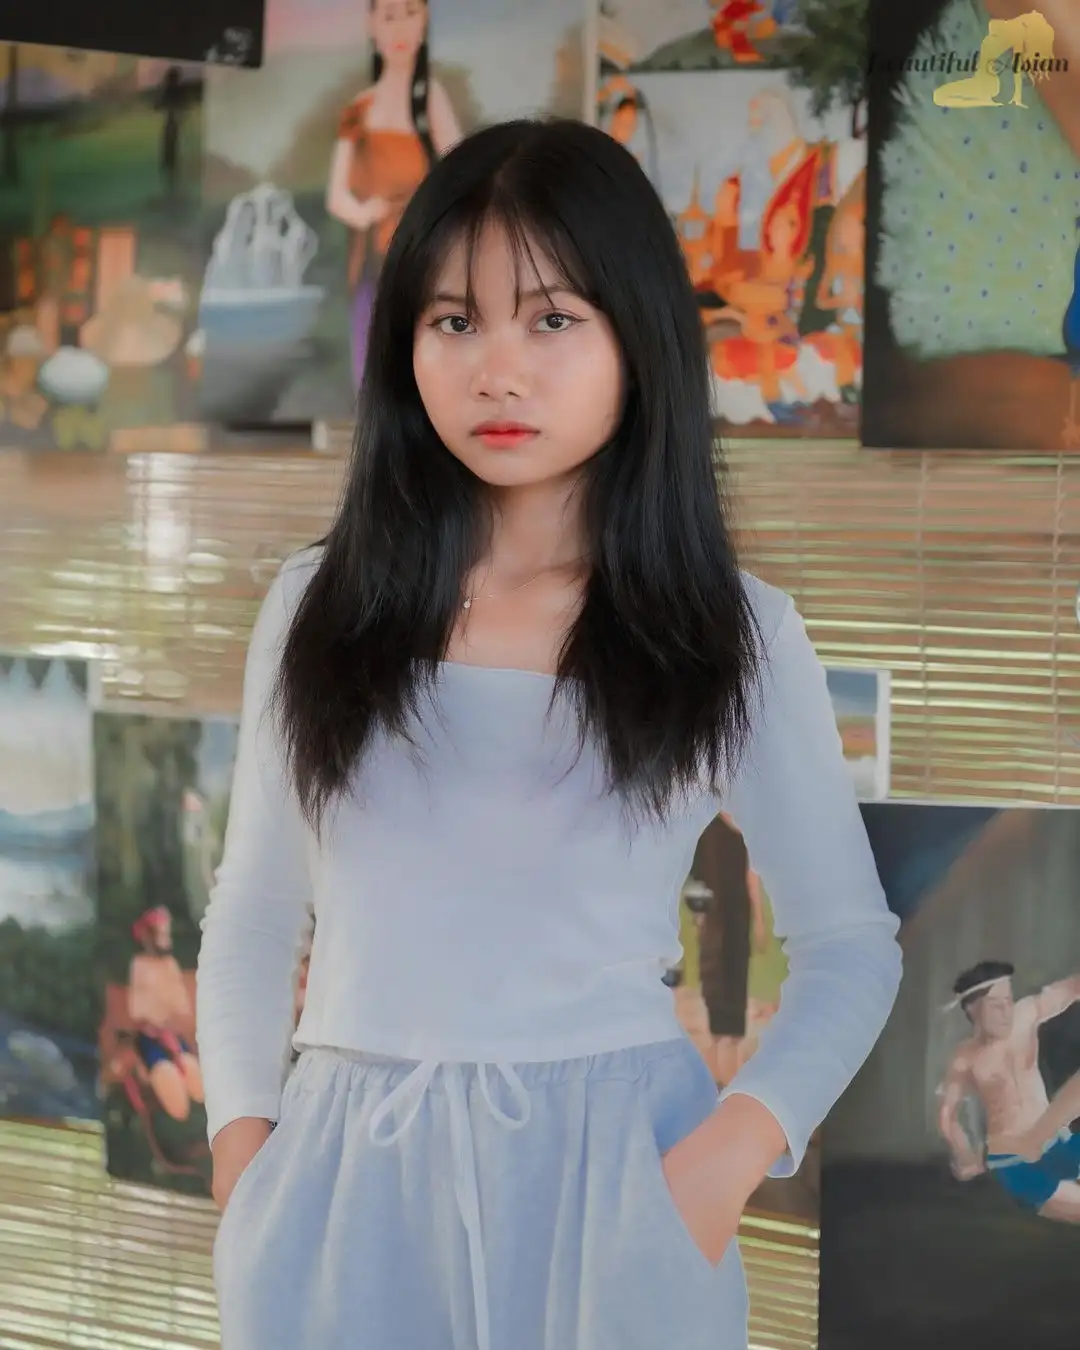 stunning Cambodian girl